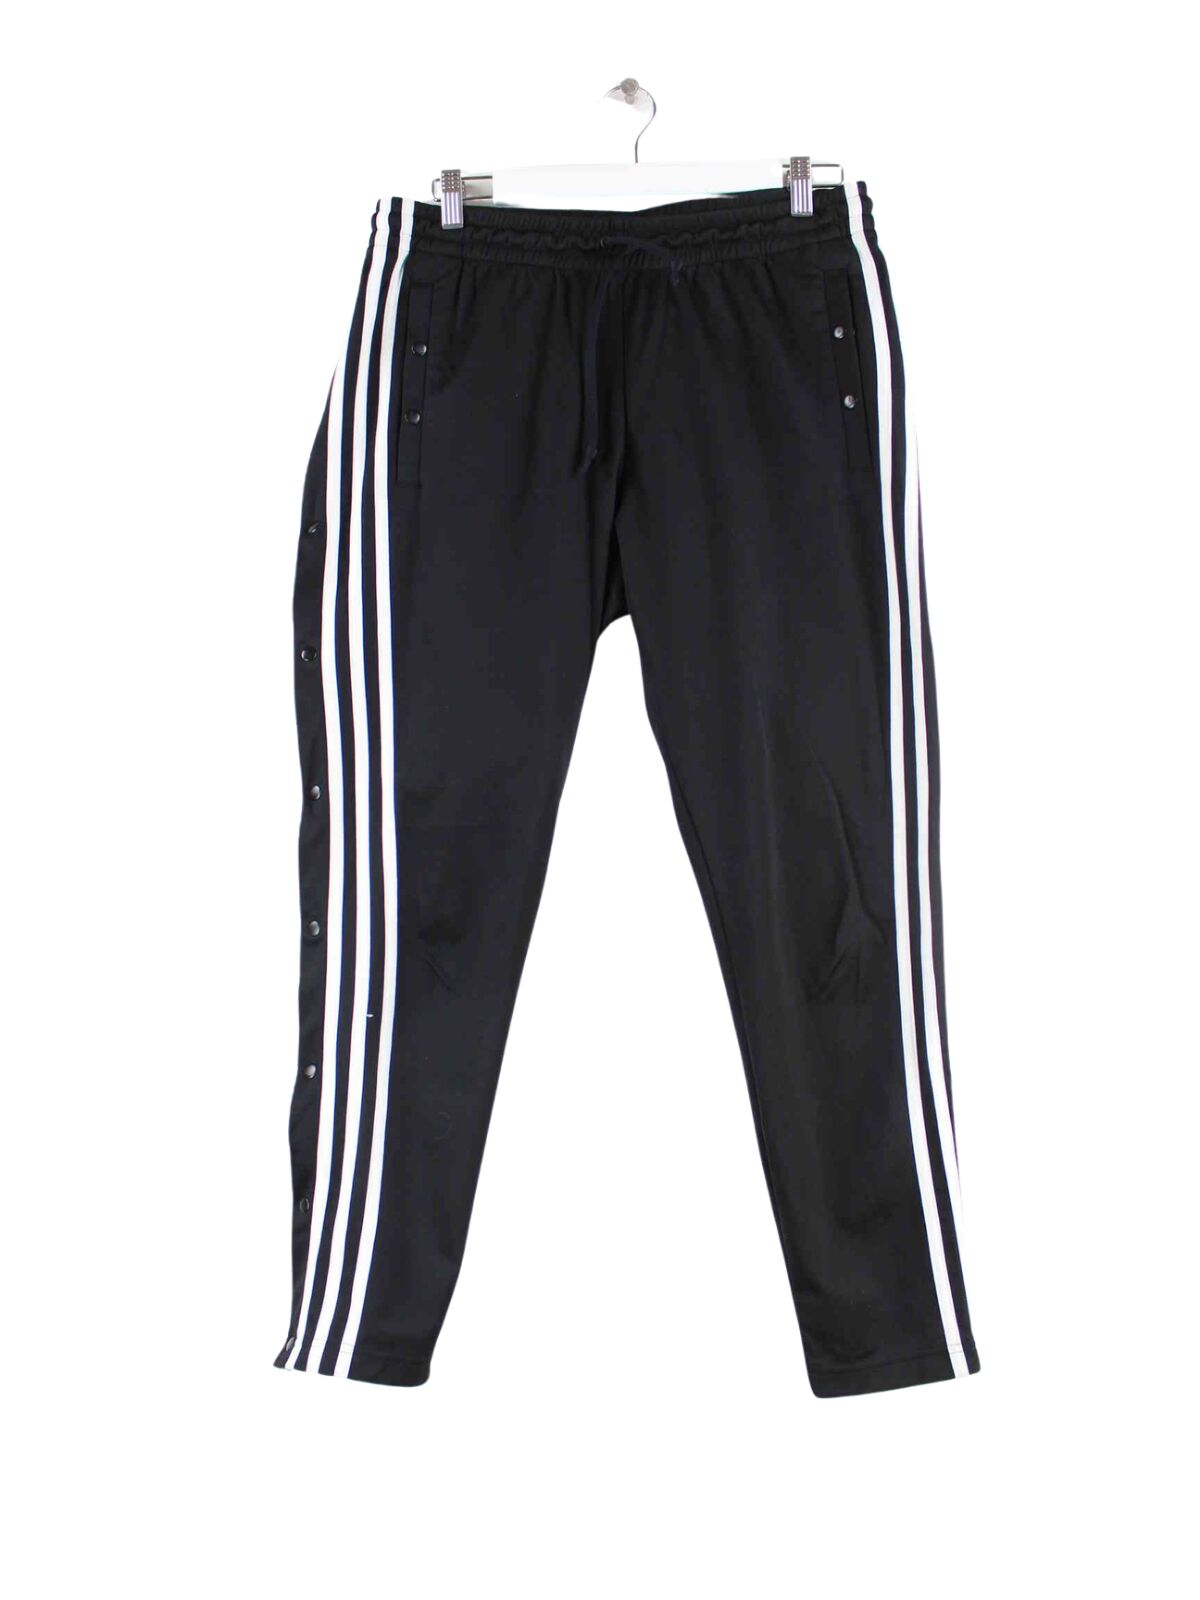 Adidas 3-Stripes Knopf Track Pants Schwarz S (front image)